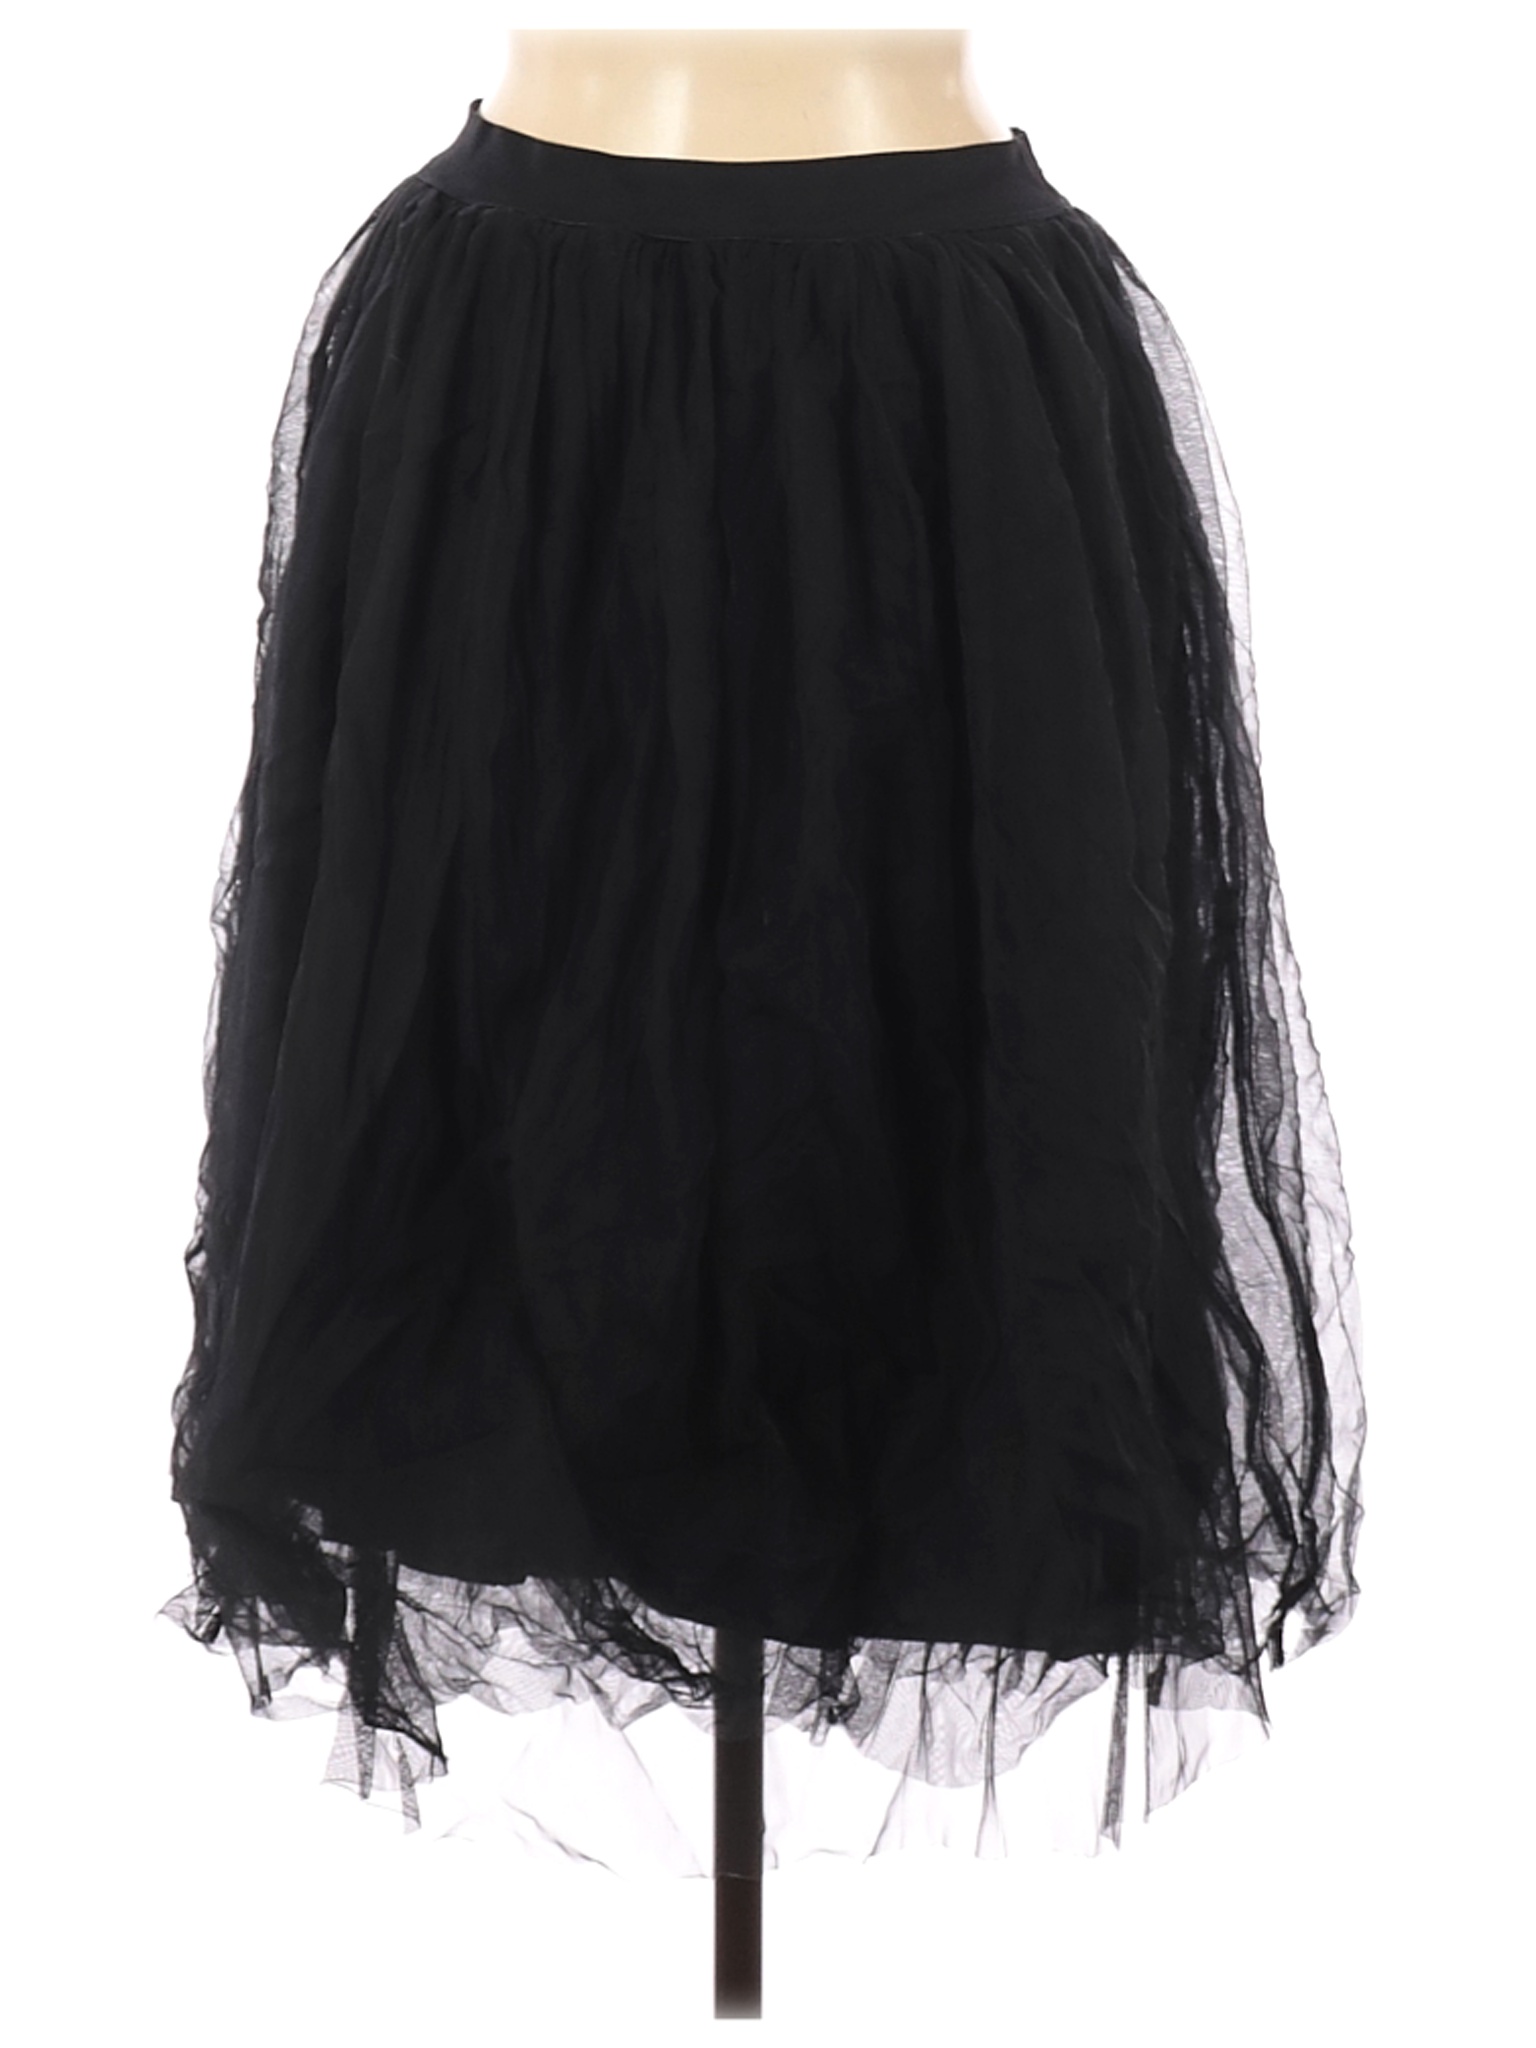 Abercrombie & Fitch Women Black Casual Skirt M | eBay